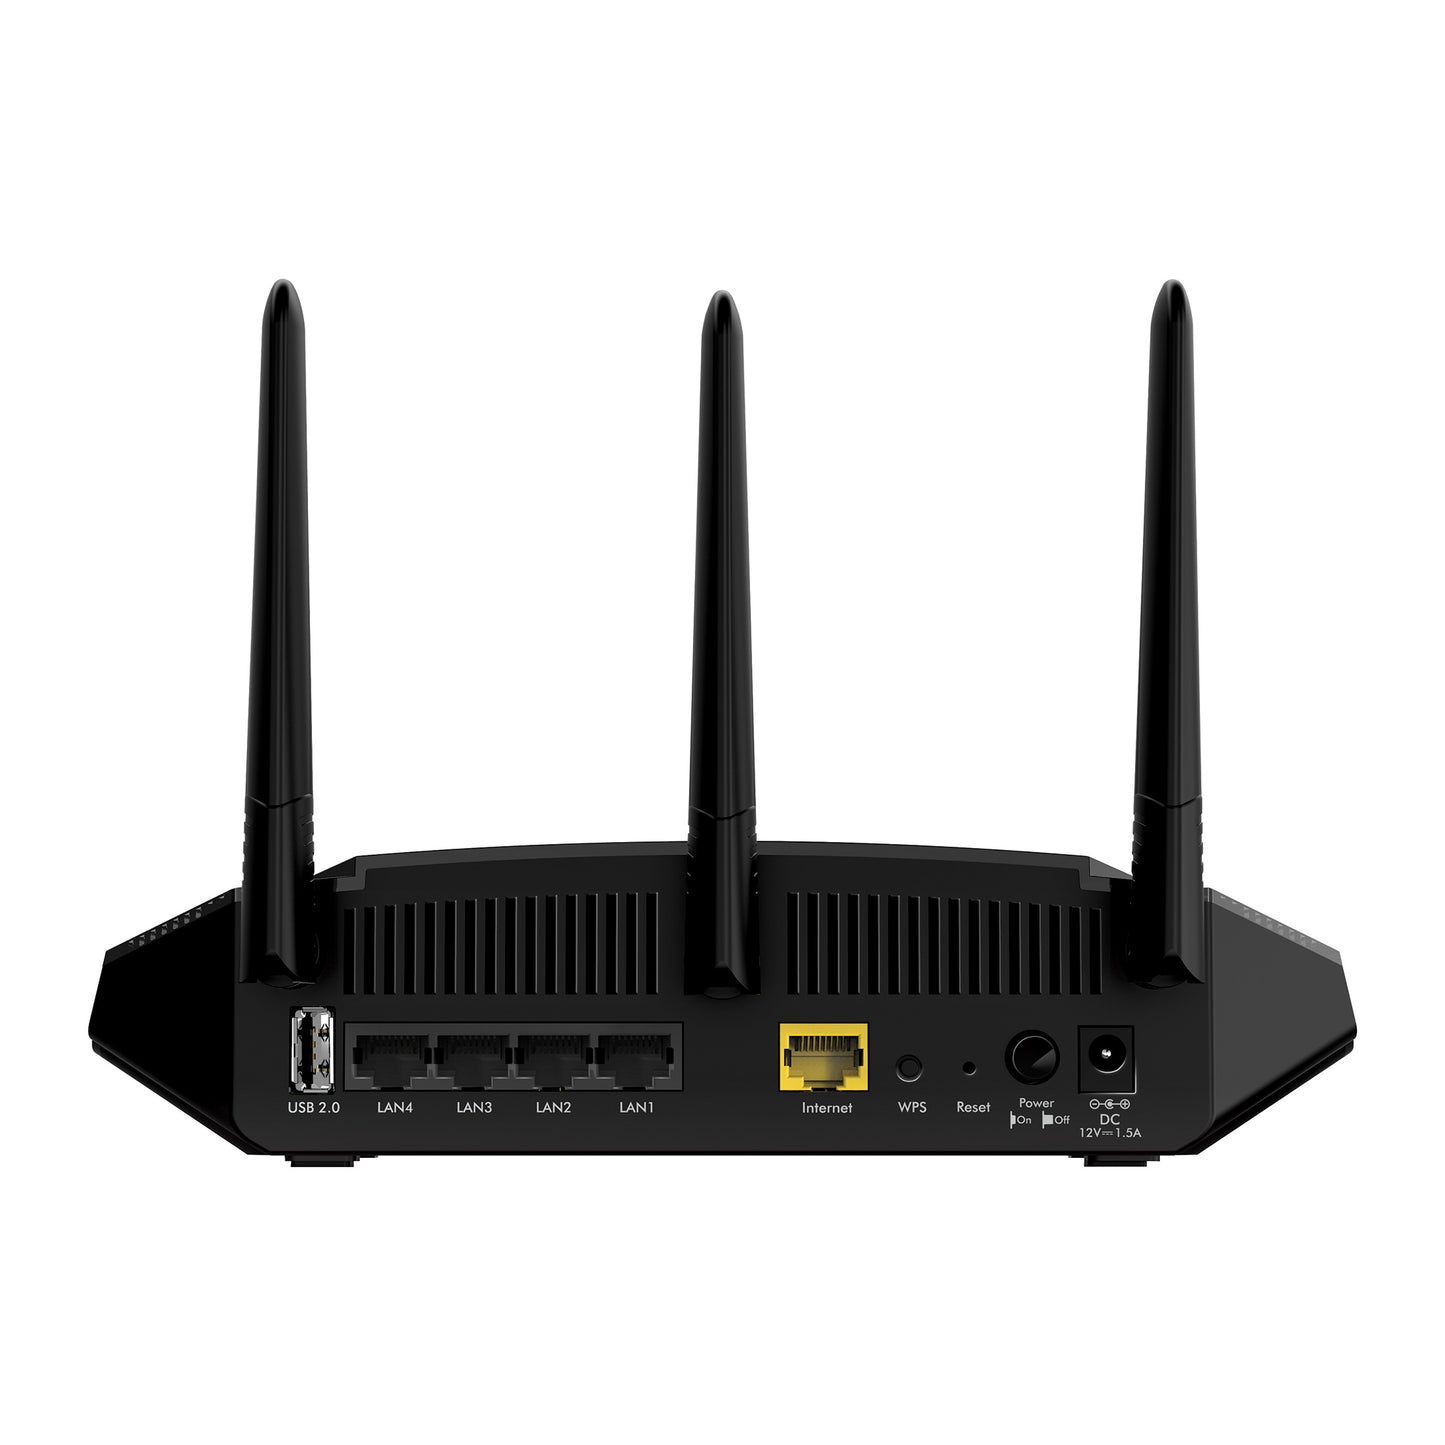 NETGEAR - AC1750 WiFi Router, 1.75Gbps (R6350)